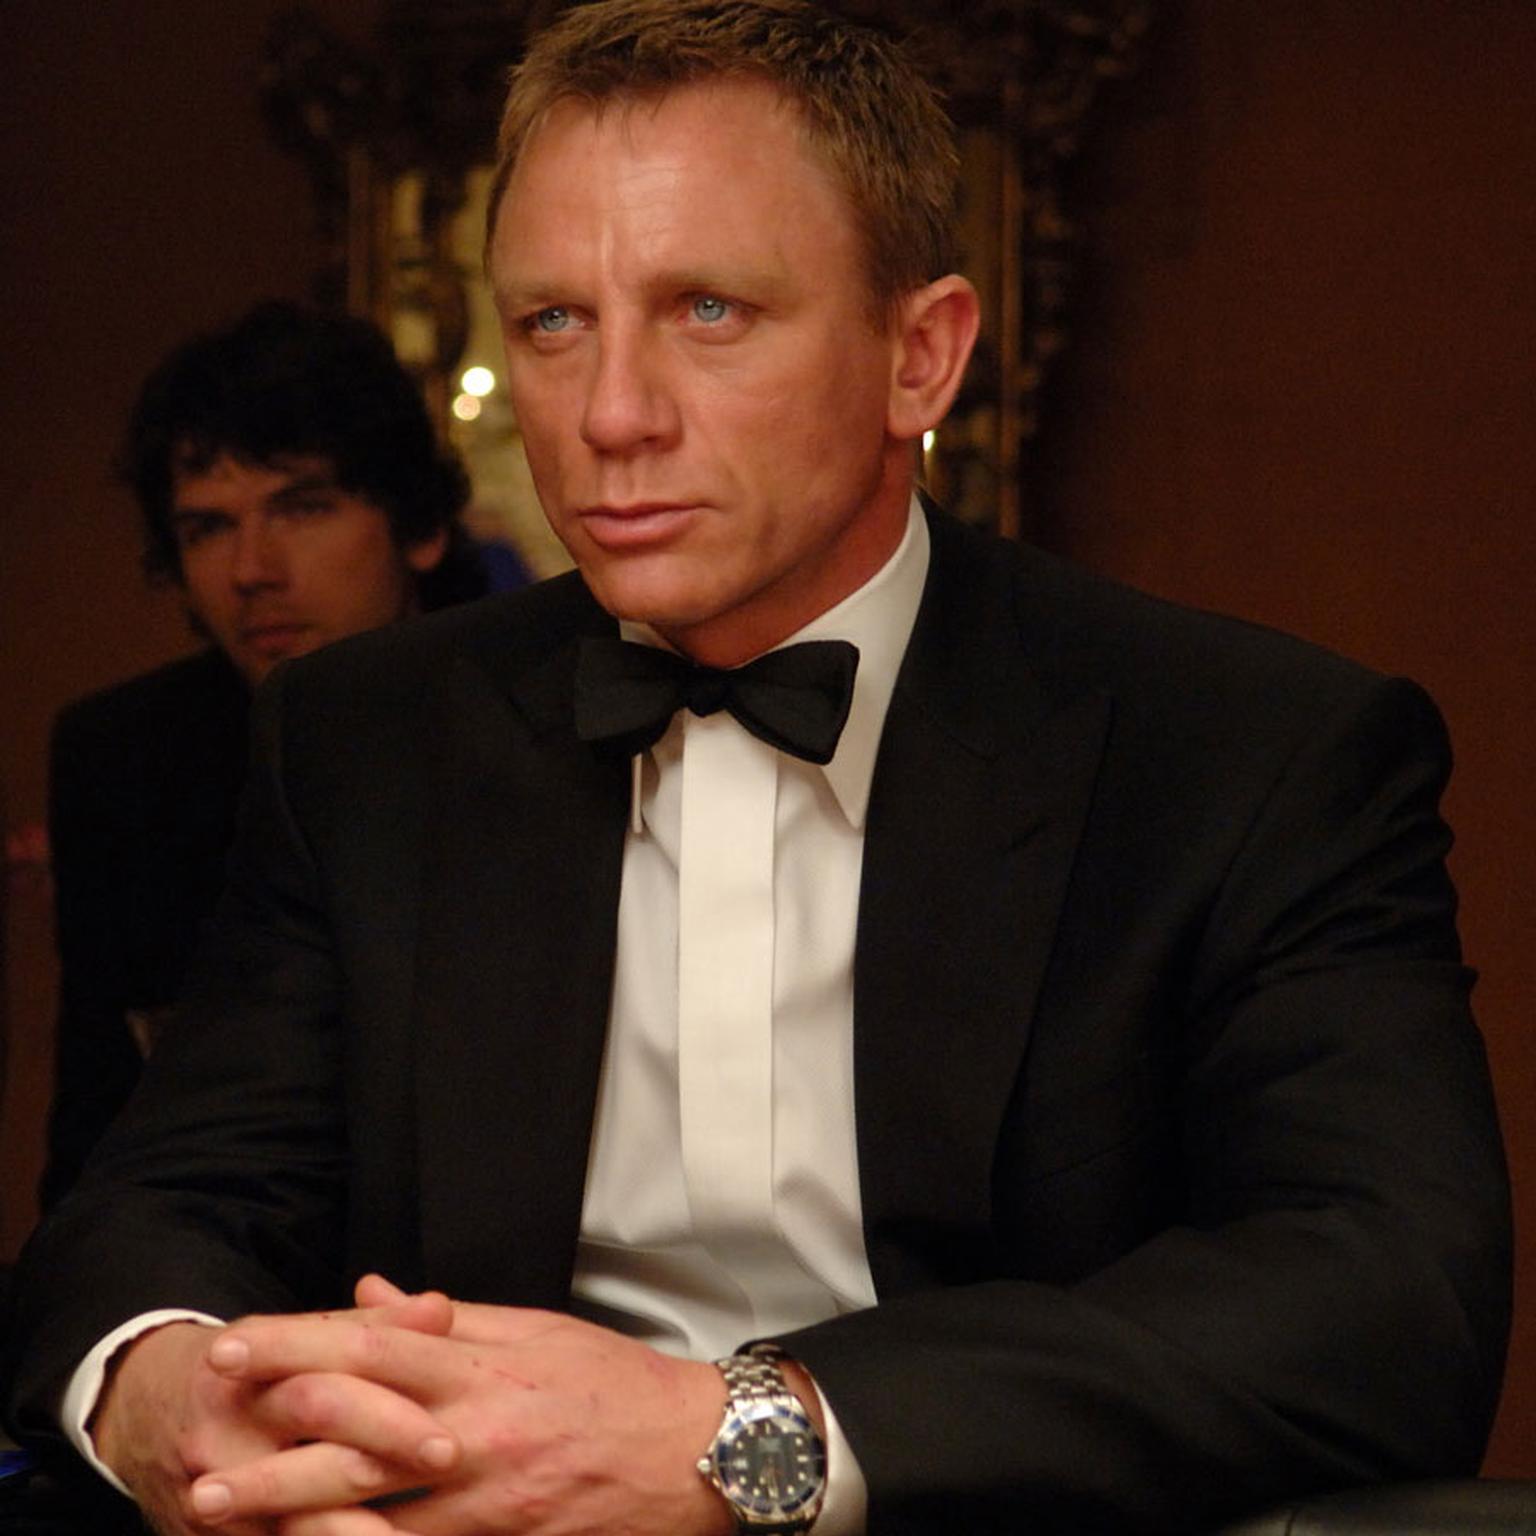 007 casino royale watch